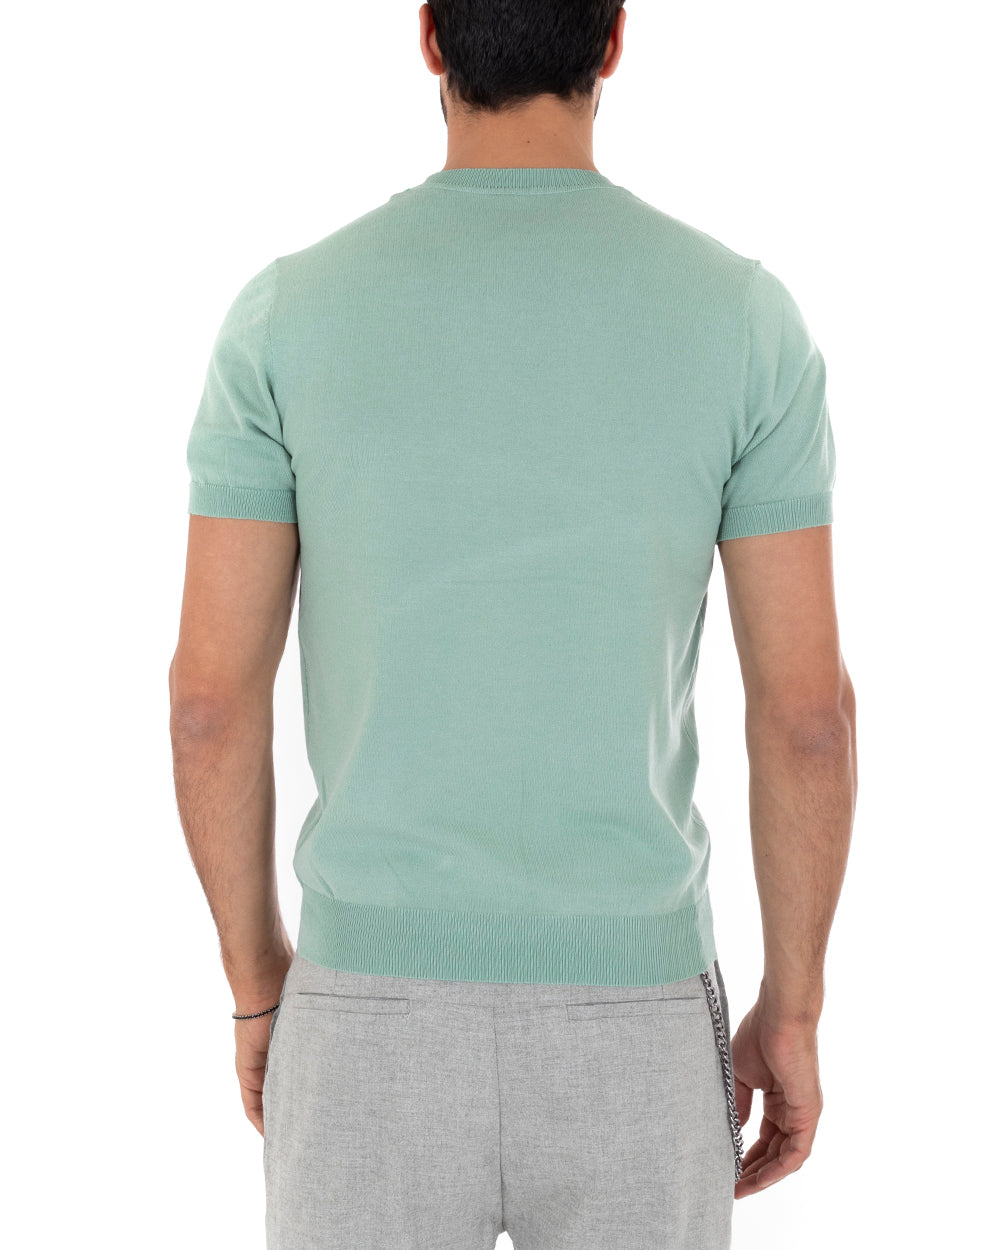 T-Shirt Uomo Manica Corta Tinta Unita Verde Salvia Girocollo Filo Casual GIOSAL-TS3050A